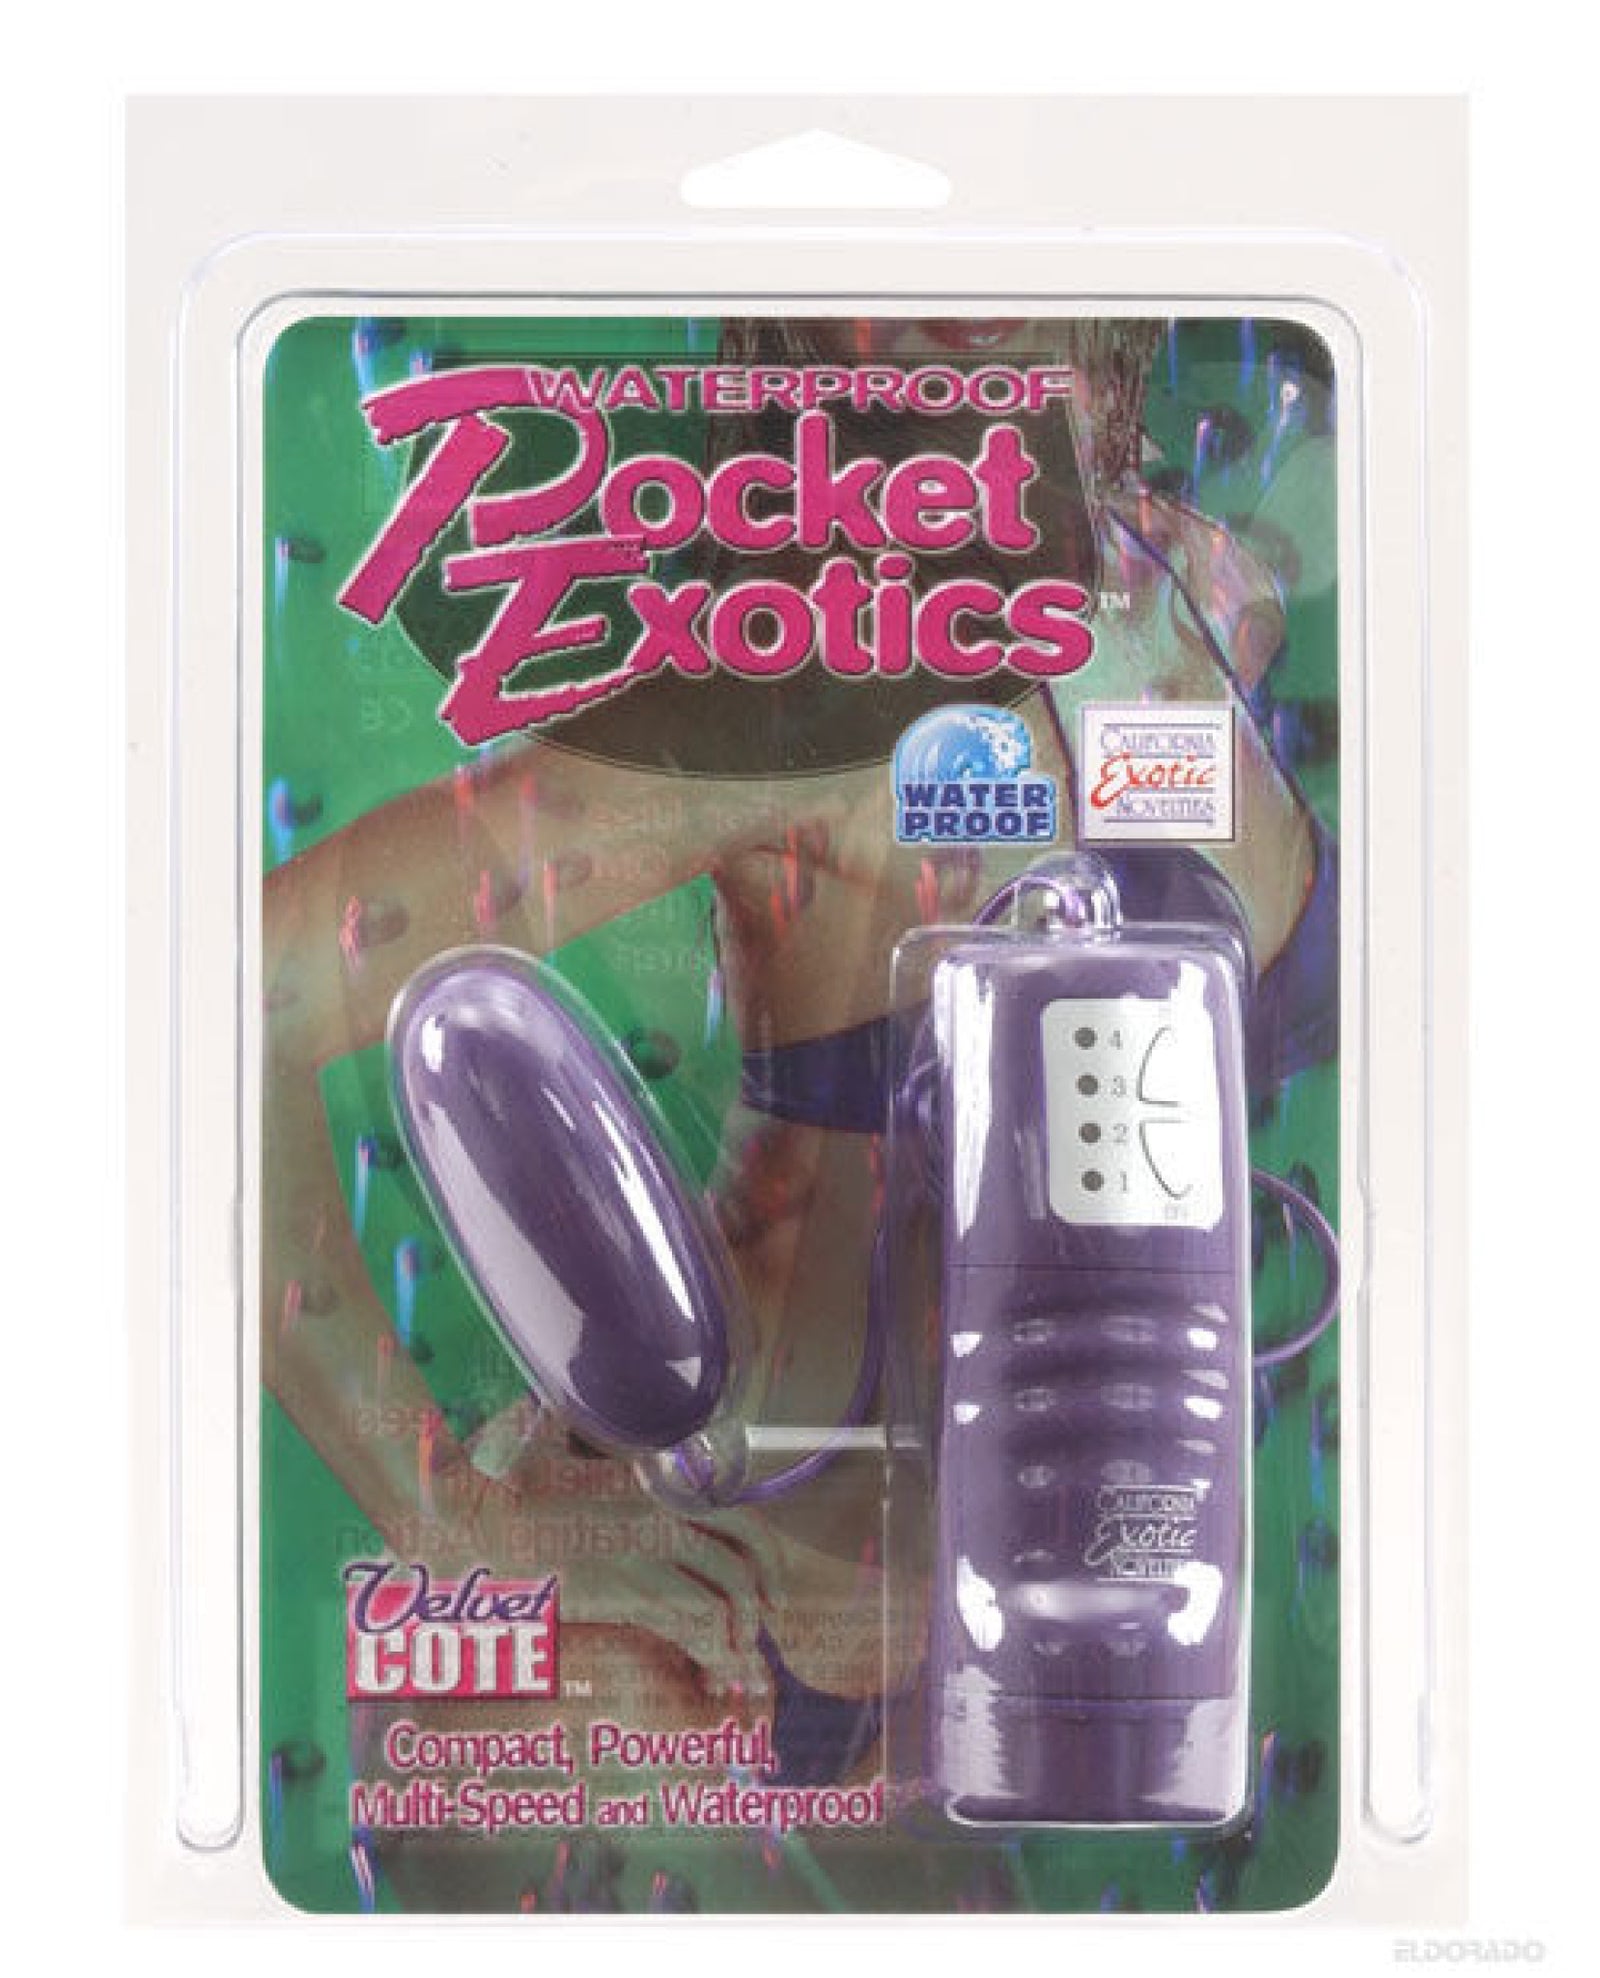 Pocket Exotics Bullet Waterproof - Purple California Exotic Novelties